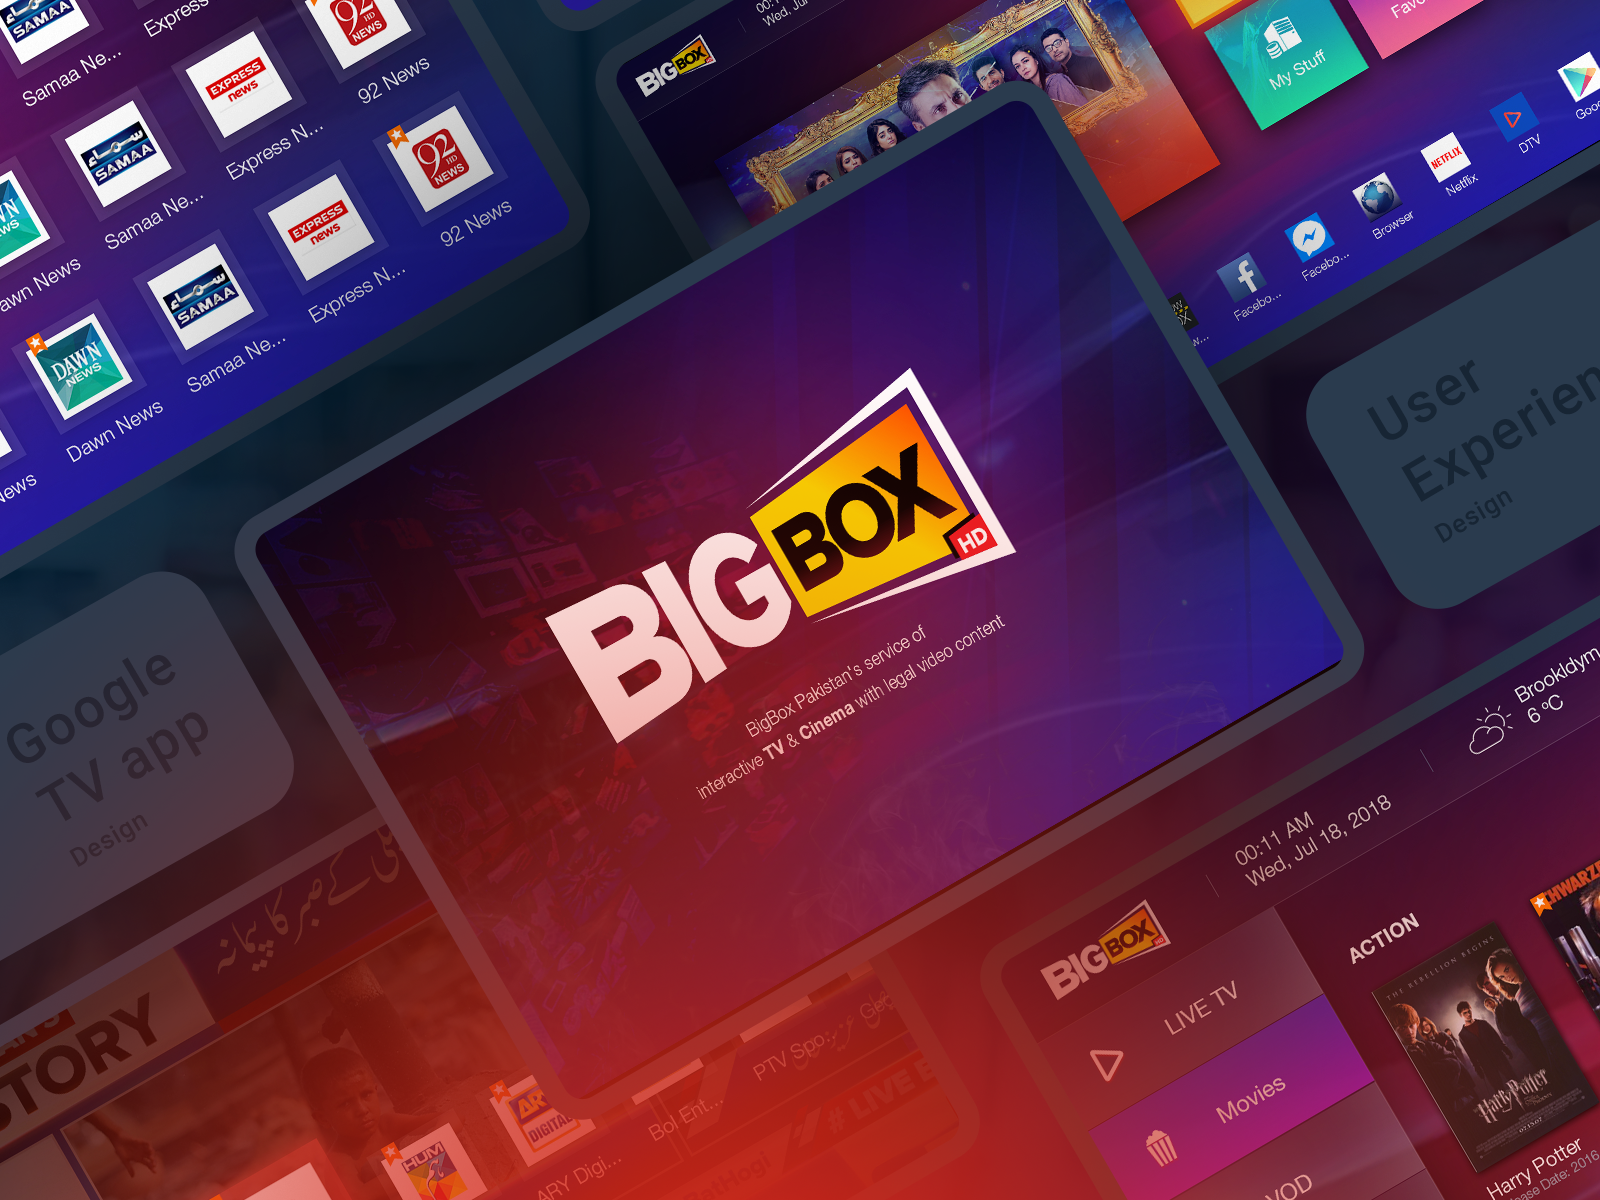 Big Box - Google TV app by Buriro Mansoor Ali on Dribbble